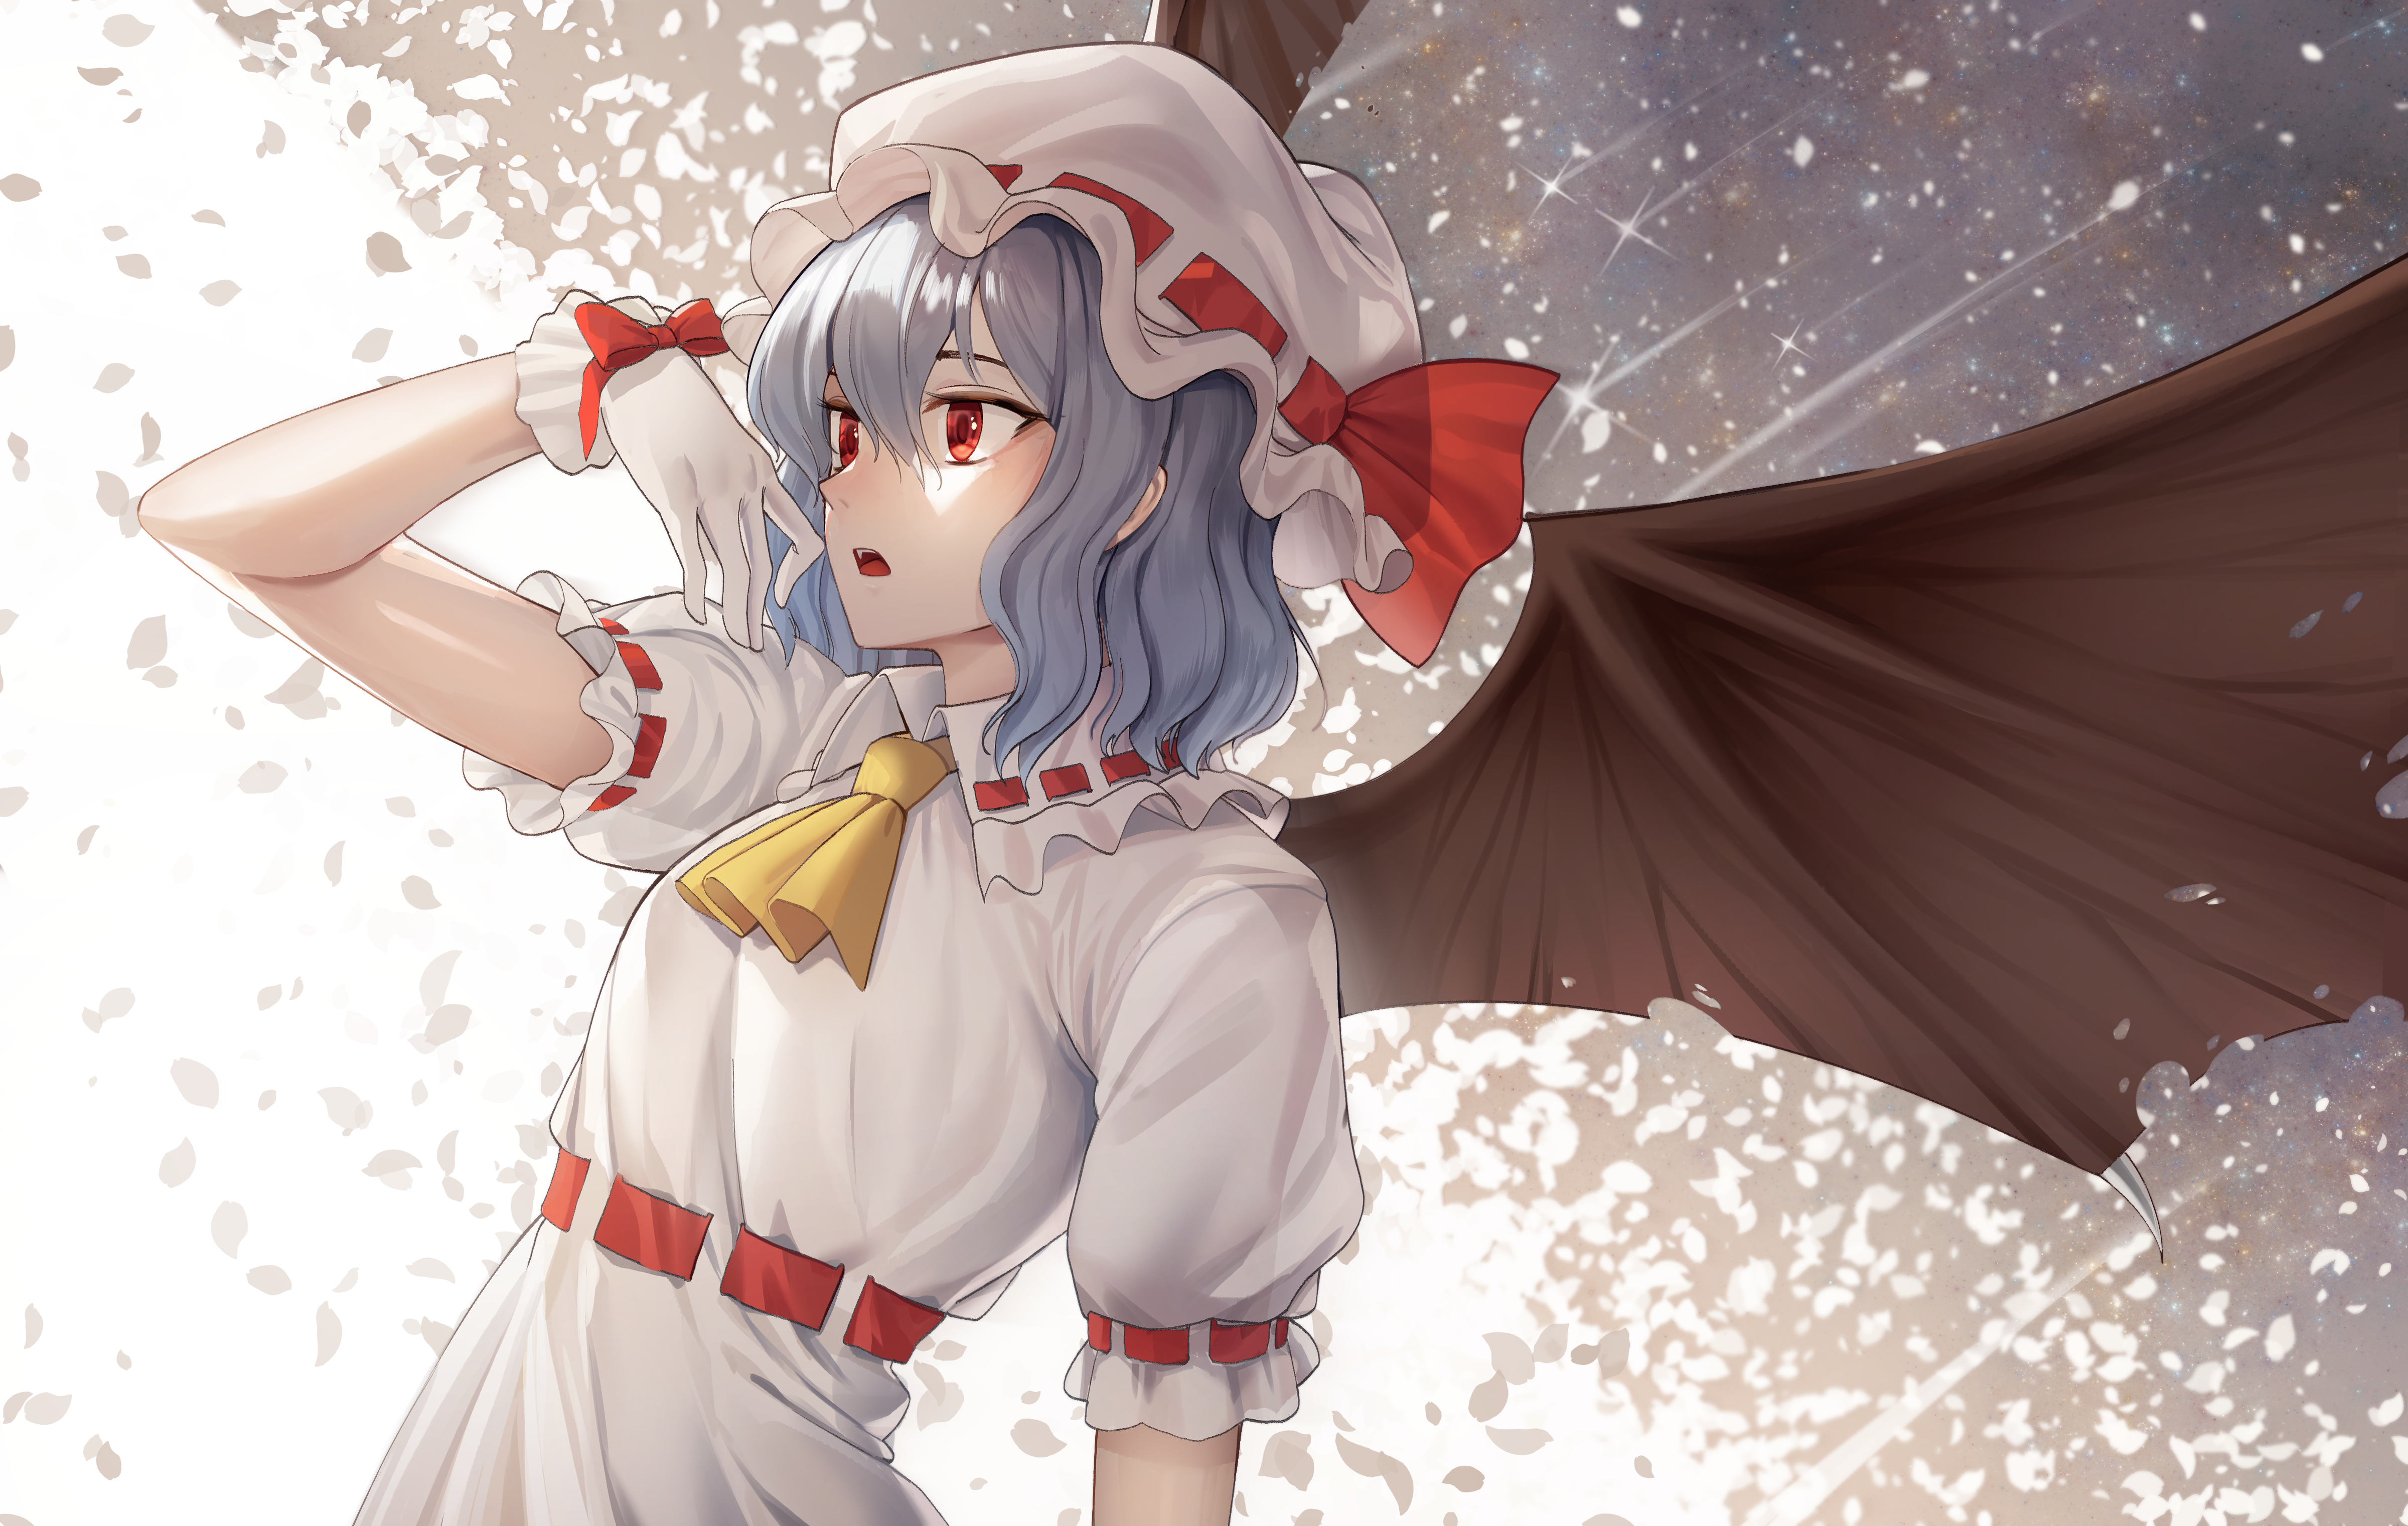 Anime 4800x3042 Goback Touhou Remilia Scarlet anime anime girls Pixiv hat red eyes gloves dress white dress white clothing women with hats open mouth